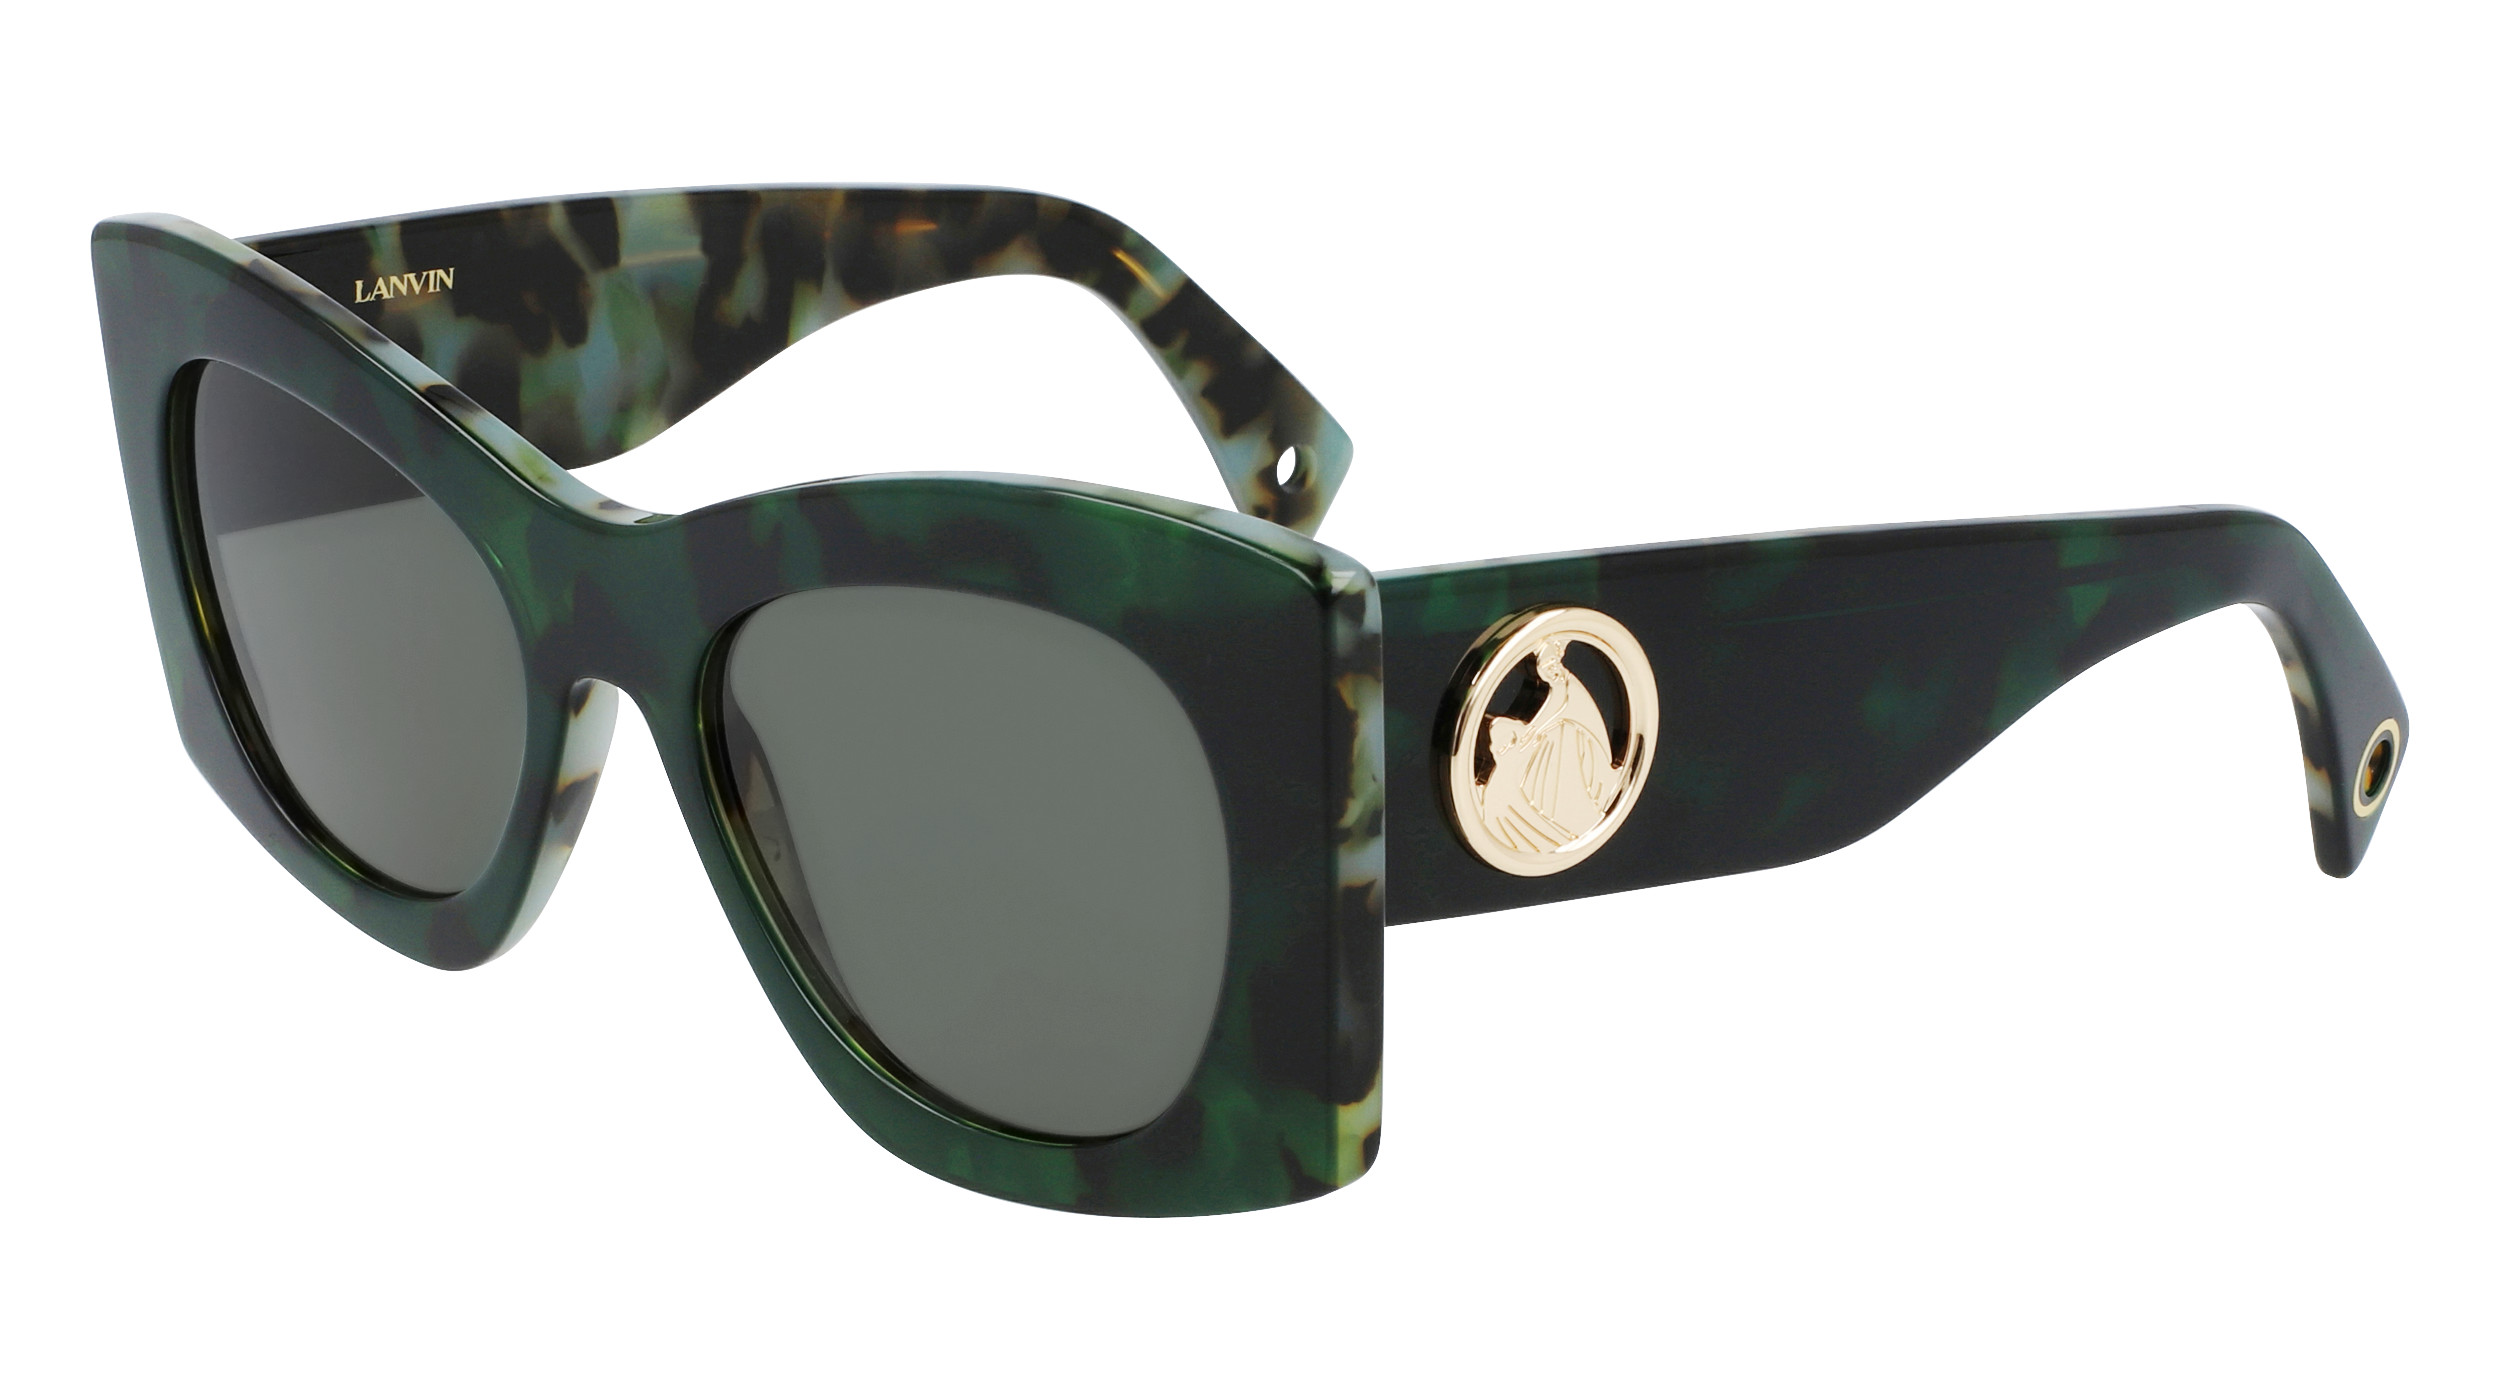 Lanvin sunglasses - George & Matilda Eyecare and Optometrist